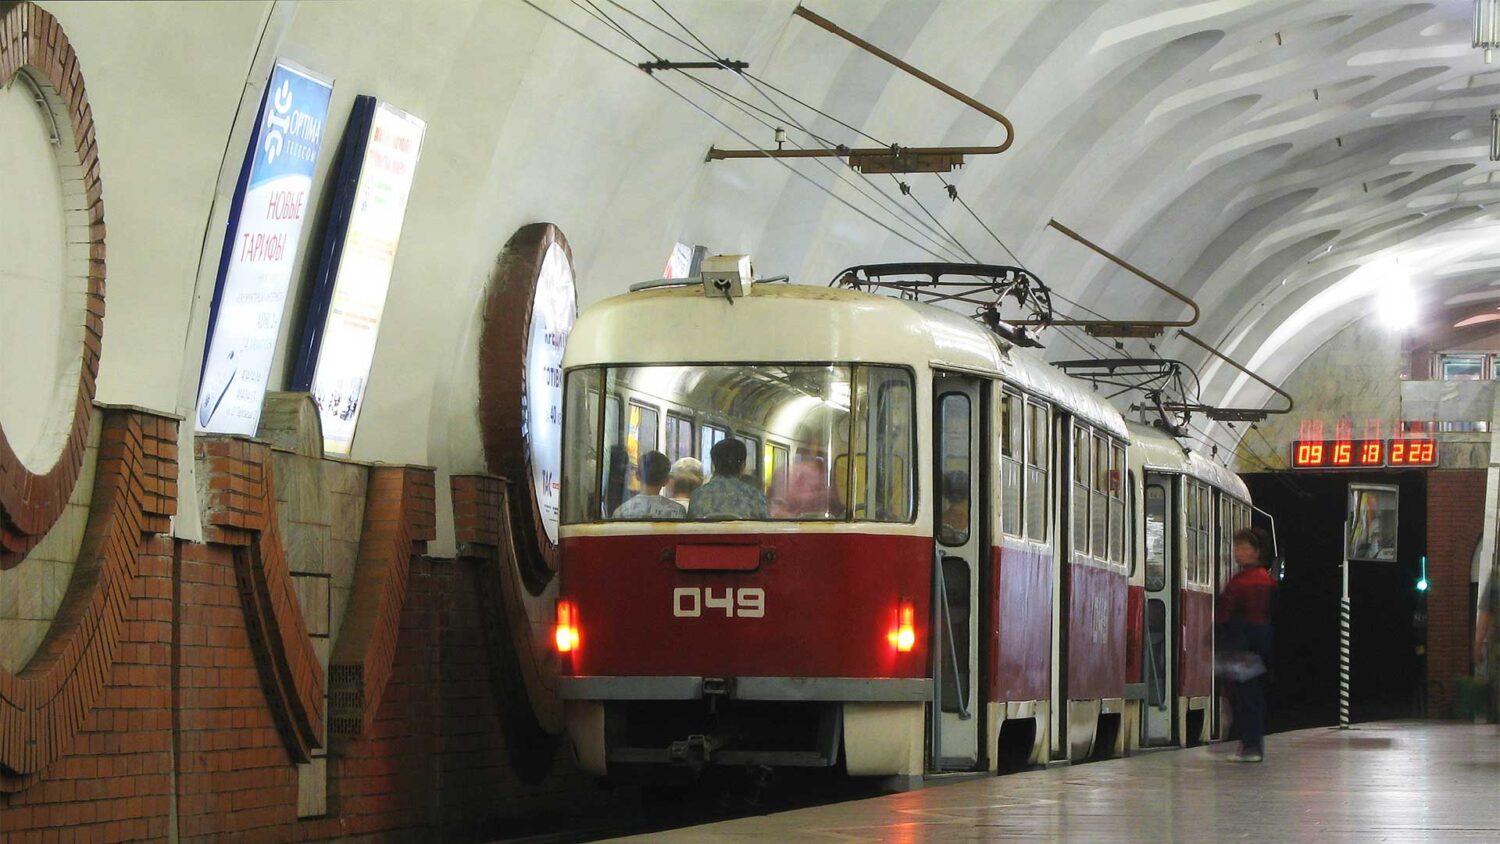 A Tatra T3 tram on the The Kryvyi Rih Metro